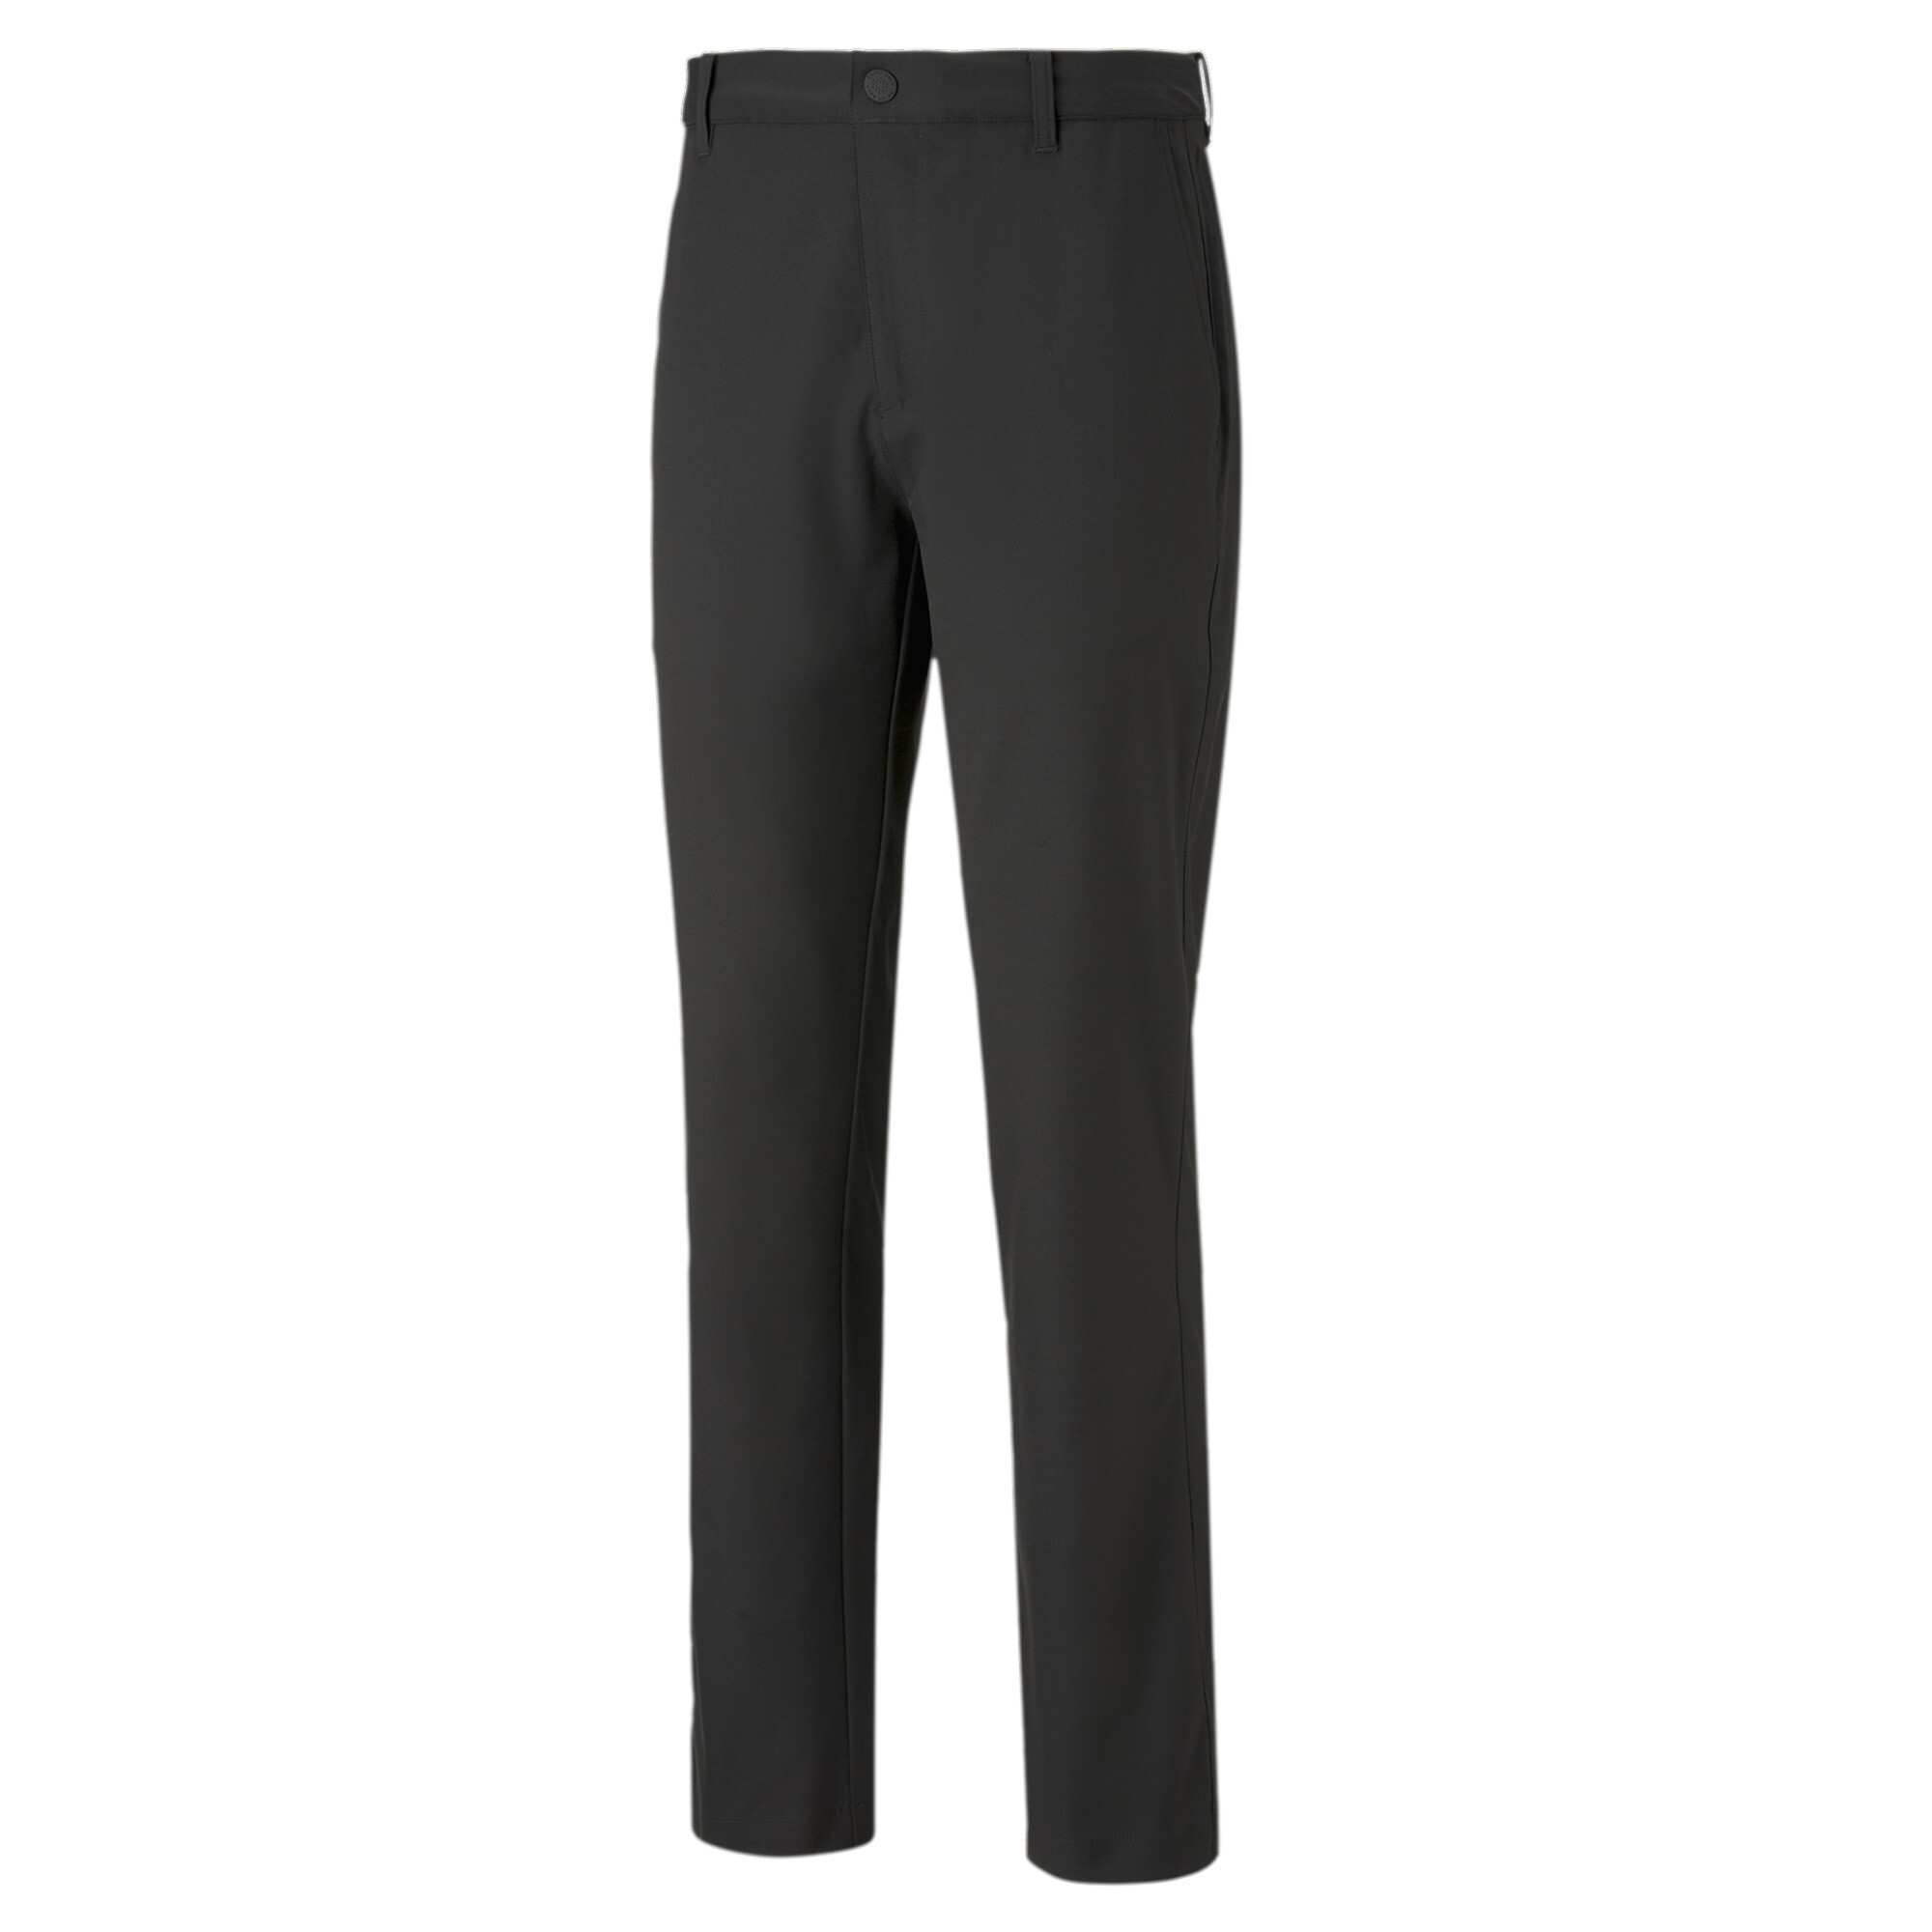 Men's Puma Dealer Golf Pants, Black, Size 32/32, Clothing